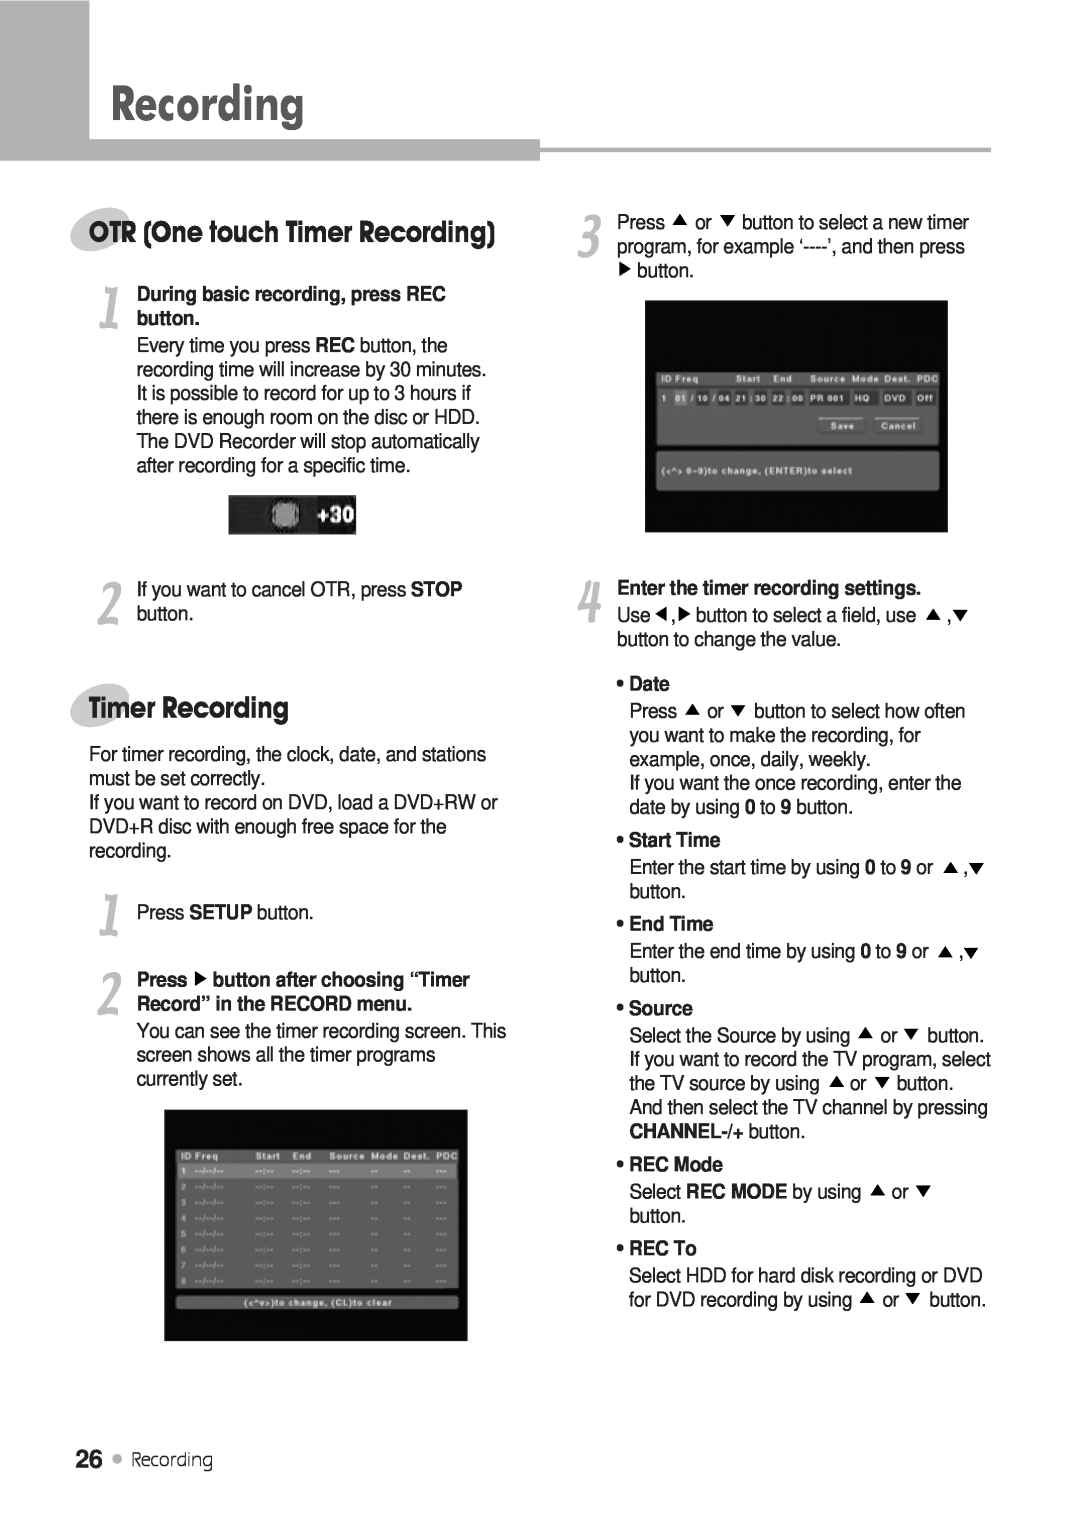 Kodak DRHD-120 OTR One touch Timer Recording, During basic recording, press REC, Record” in the RECORD menu, Date 